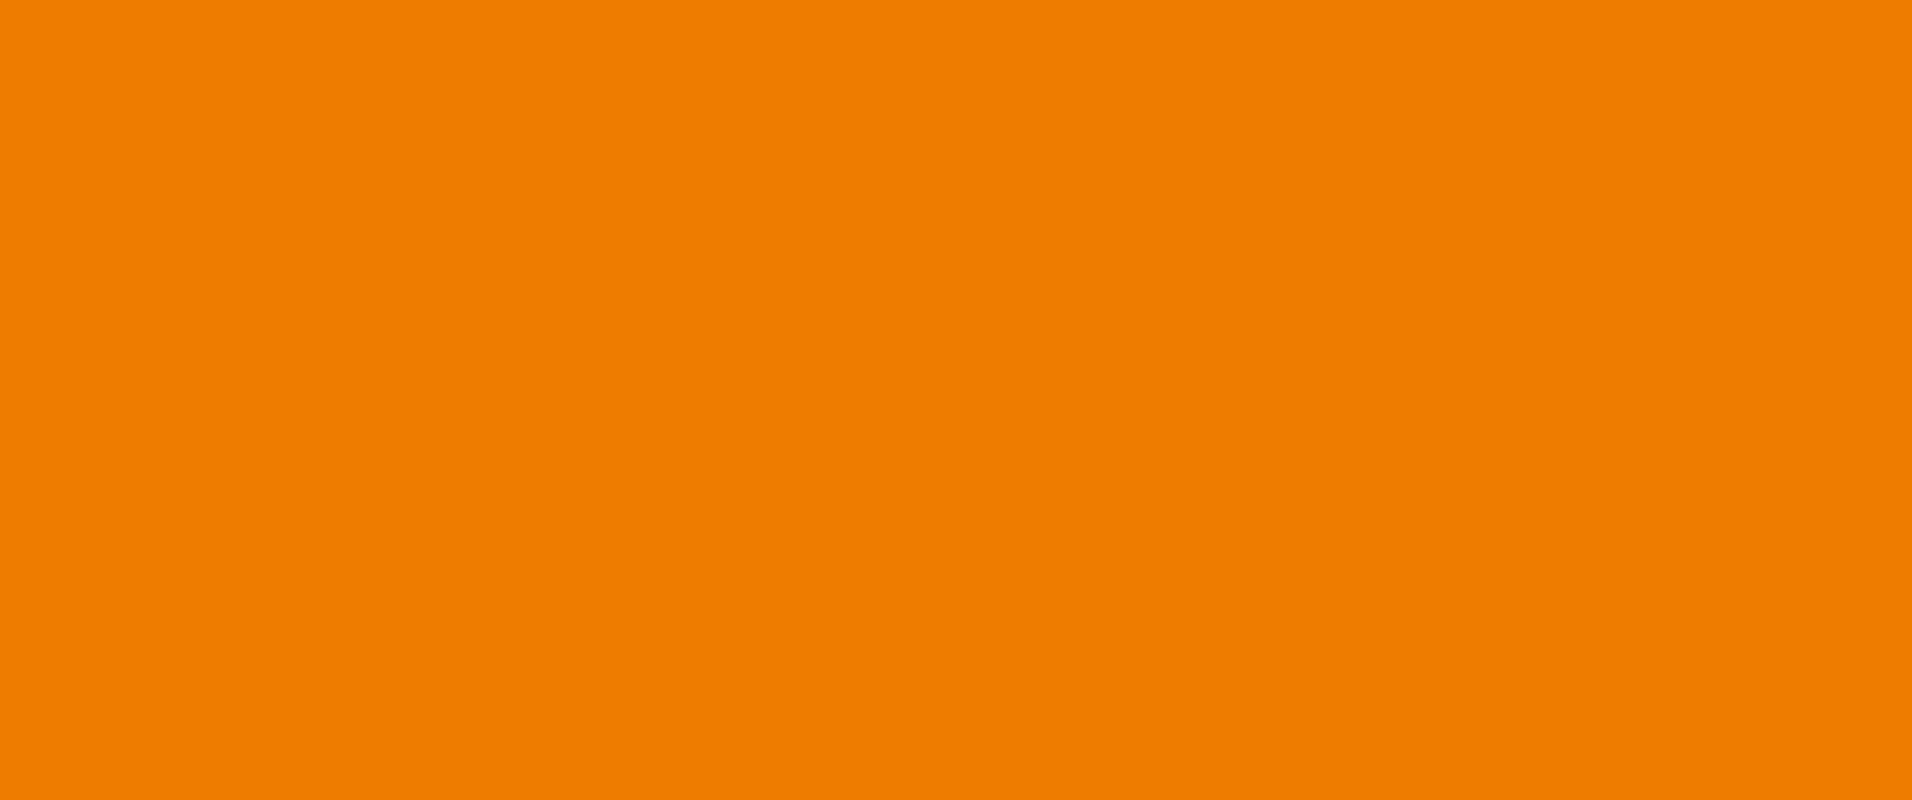 Textil Marker - medium 2-4 mm, orange